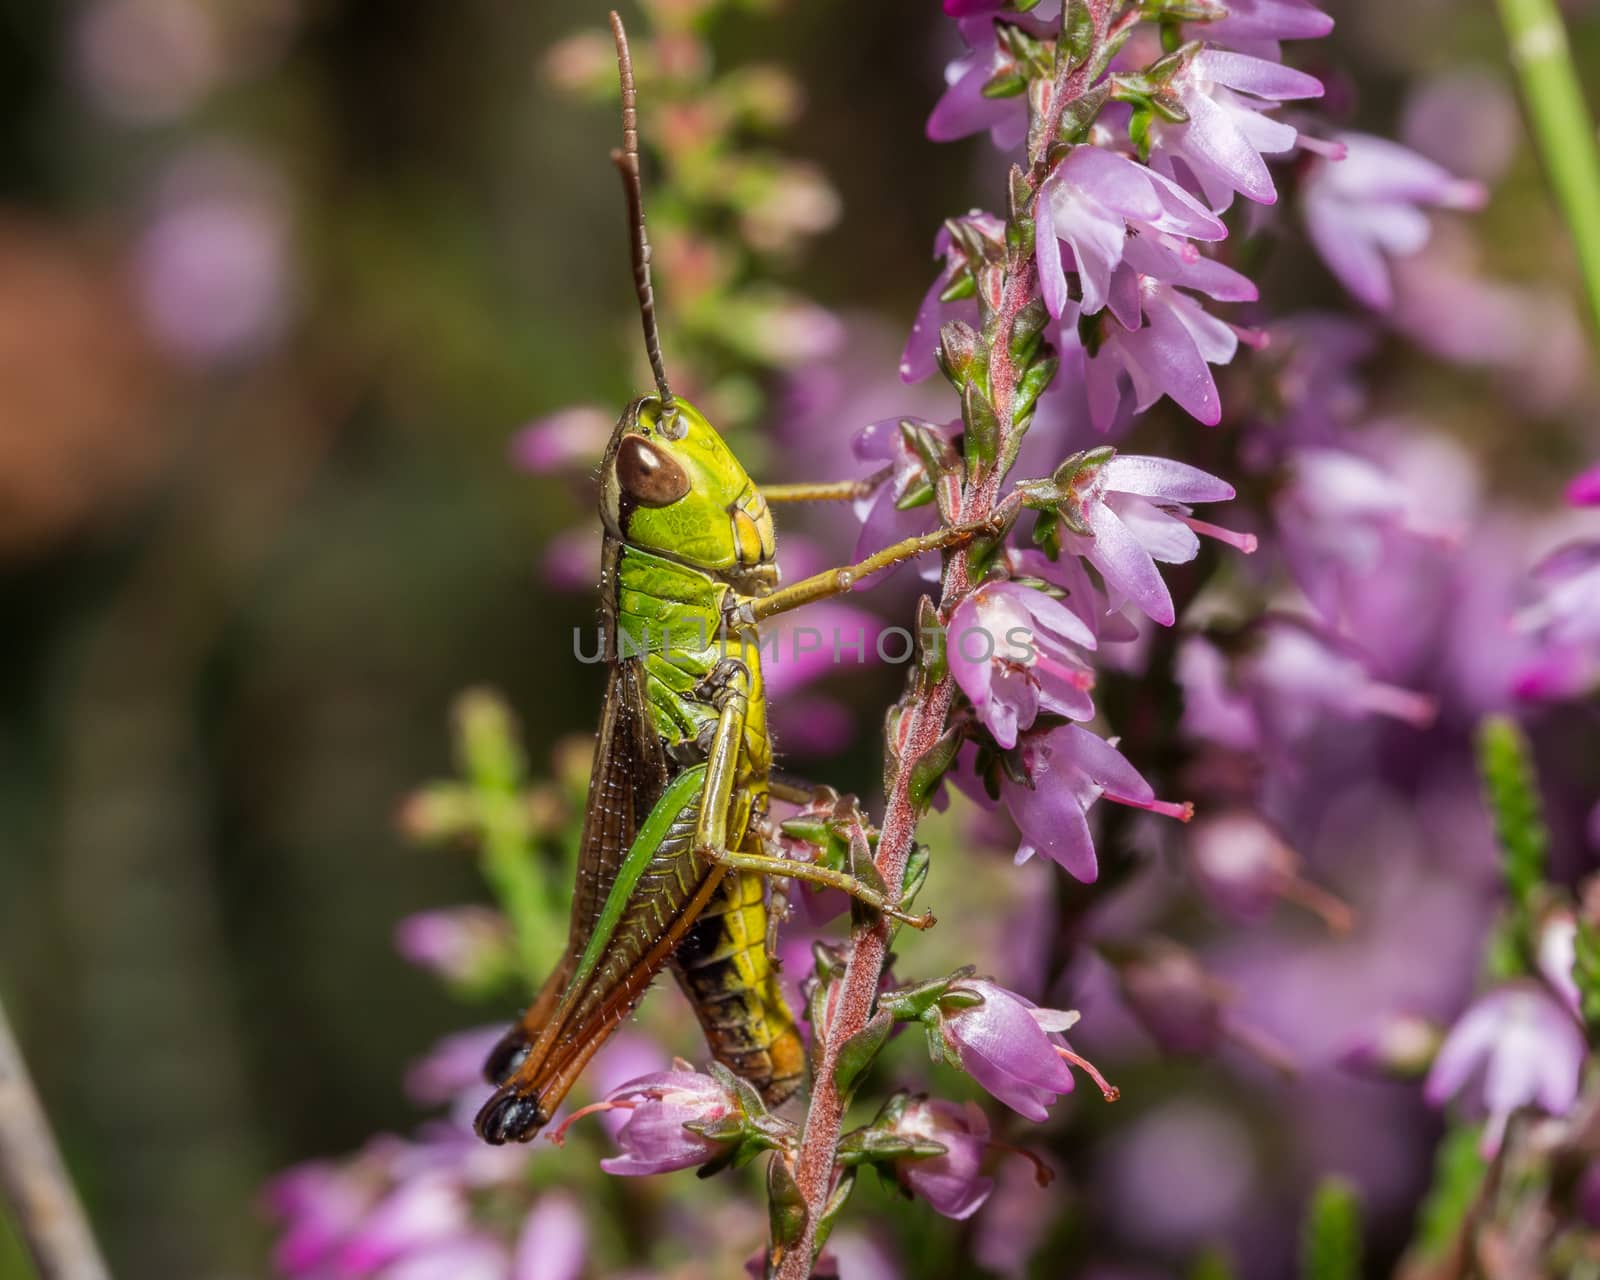 Grasshopper on pink flower by frankhoekzema